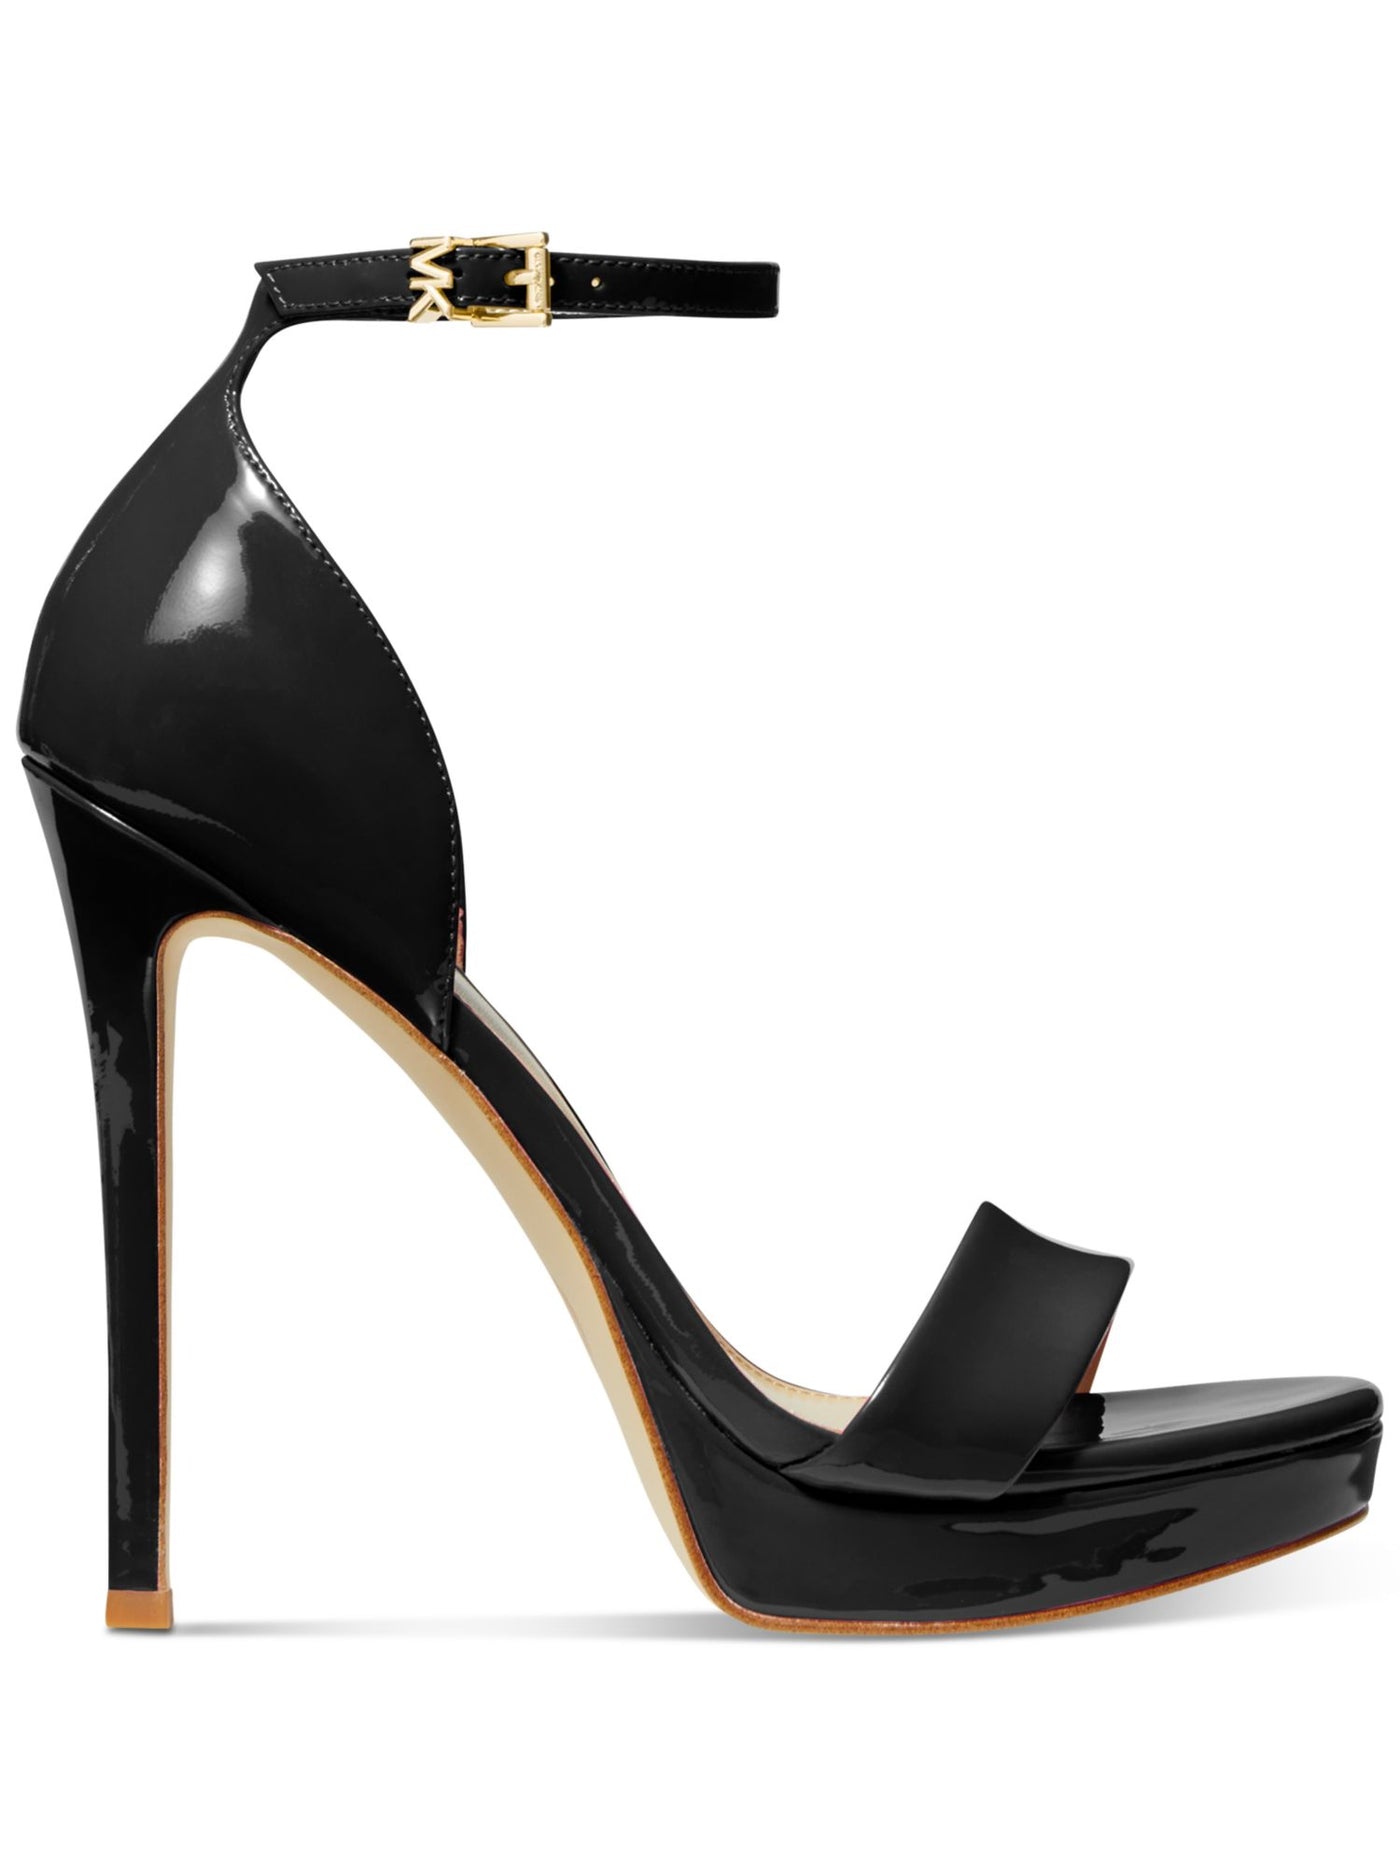 MICHAEL MICHAEL KORS Womens Black Ankle Strap Padded Jordyn Round Toe Stiletto Buckle Leather Dress Heeled Sandal 5.5 M